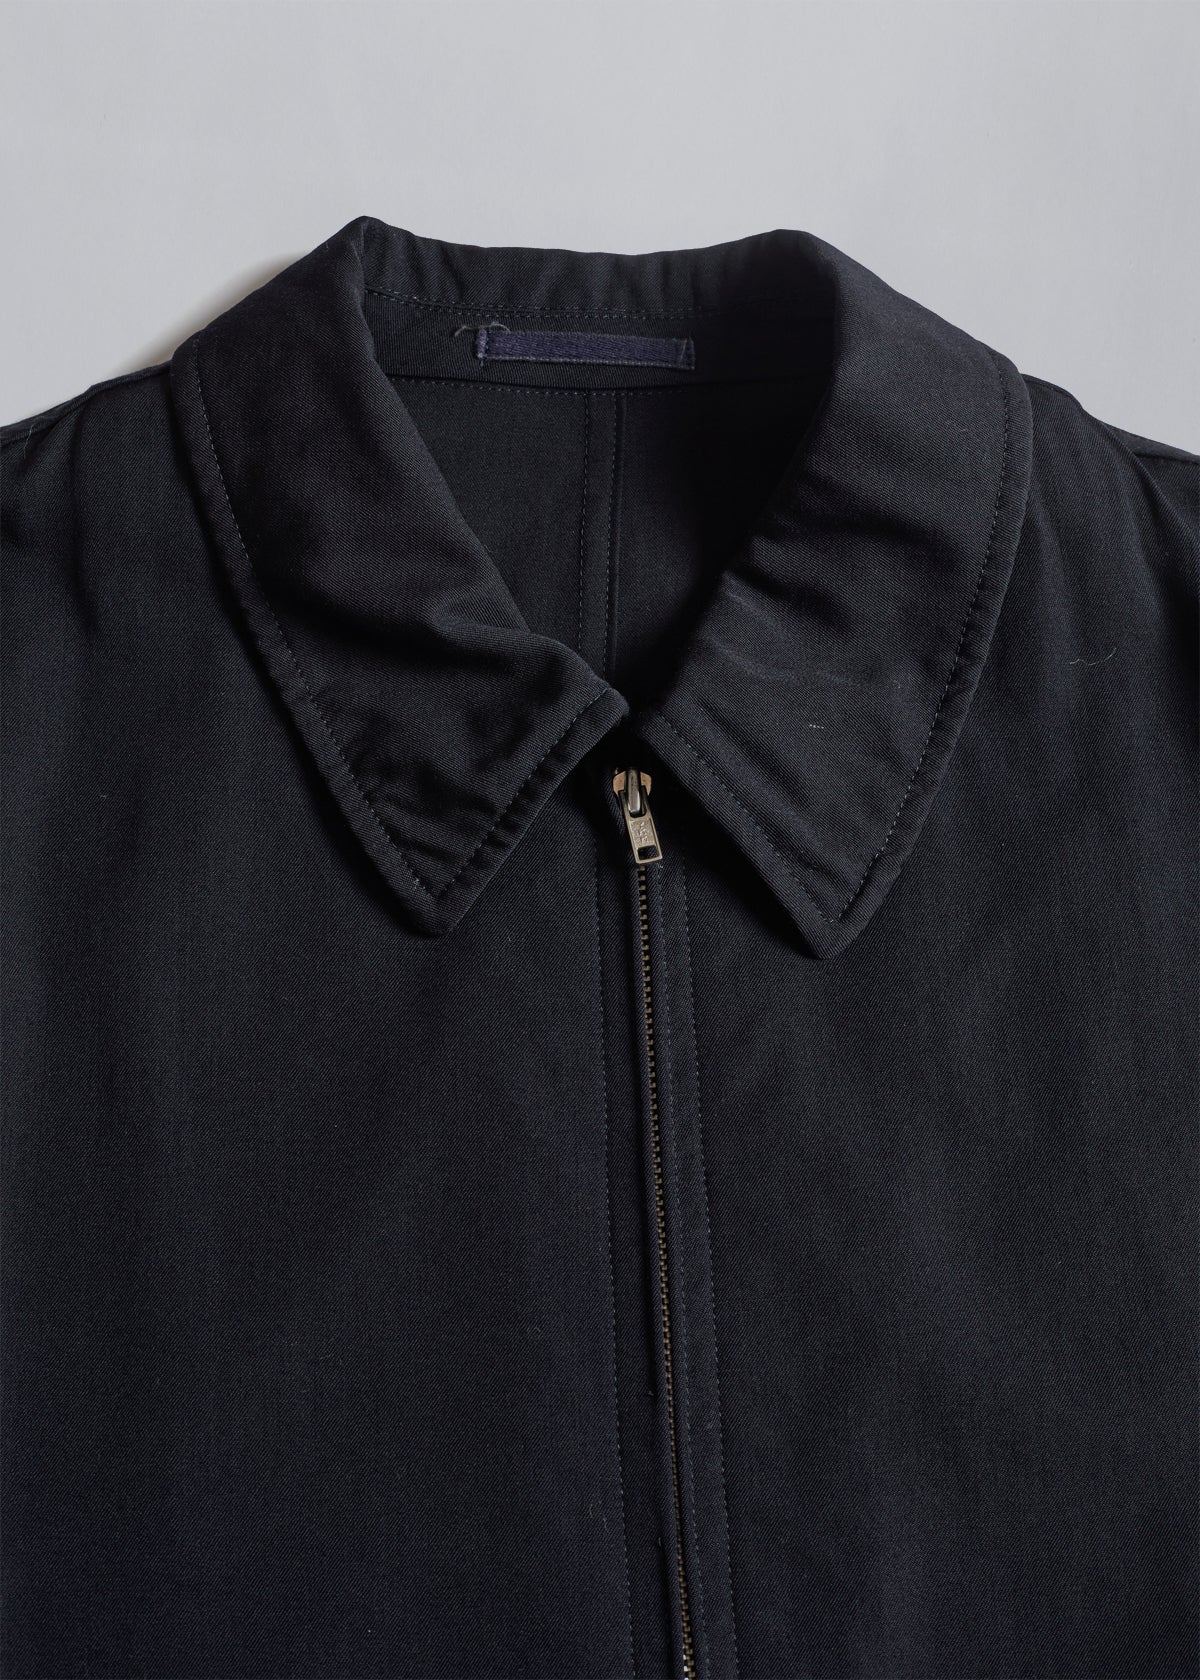 Homme Tropical Wool Zip Work Jacket 1993 - Medium - The Archivist Store